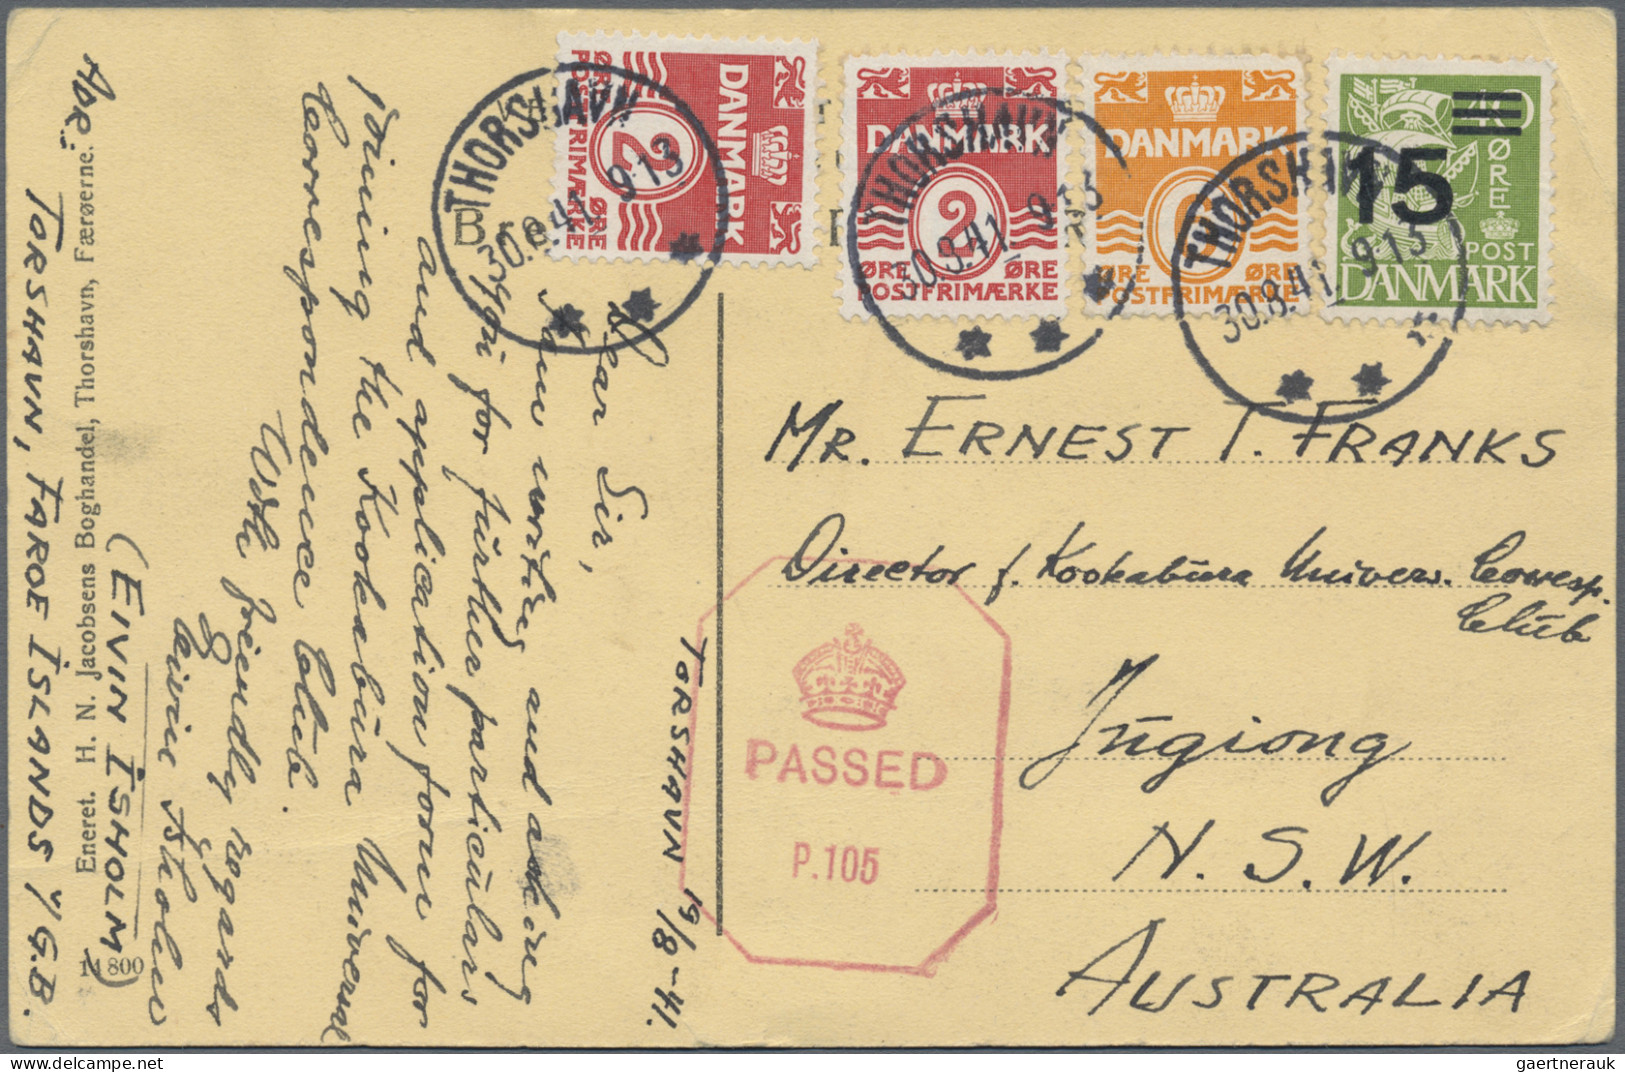 Faroe Islands: 1941, Picture Postcard From Thorshavn (30.08.41) To Australia, Ce - Féroé (Iles)